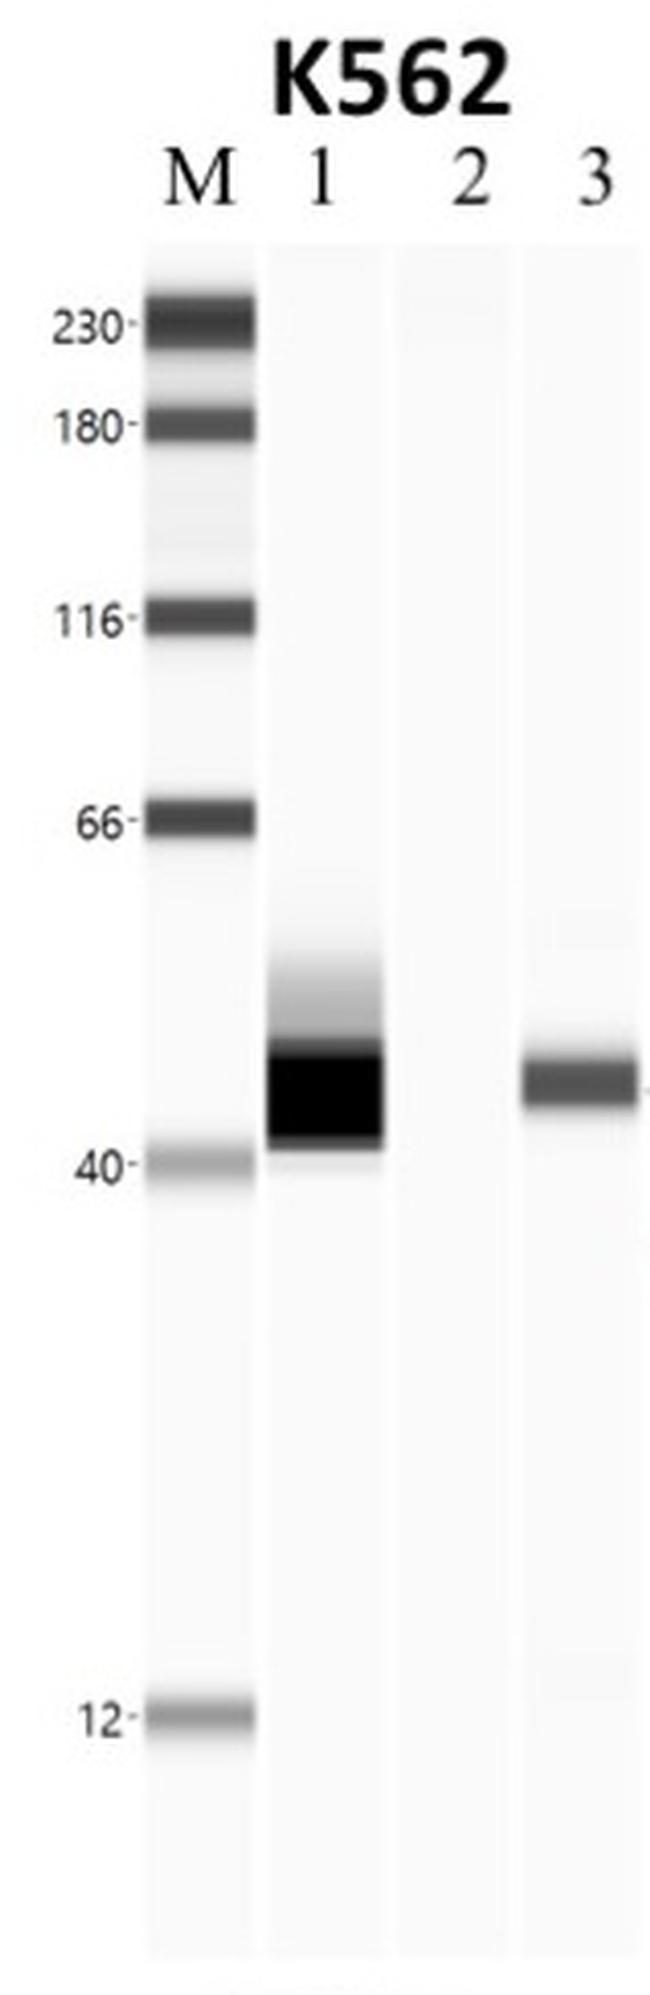 NPM1 Antibody in RNA Immunoprecipitation (RIP)